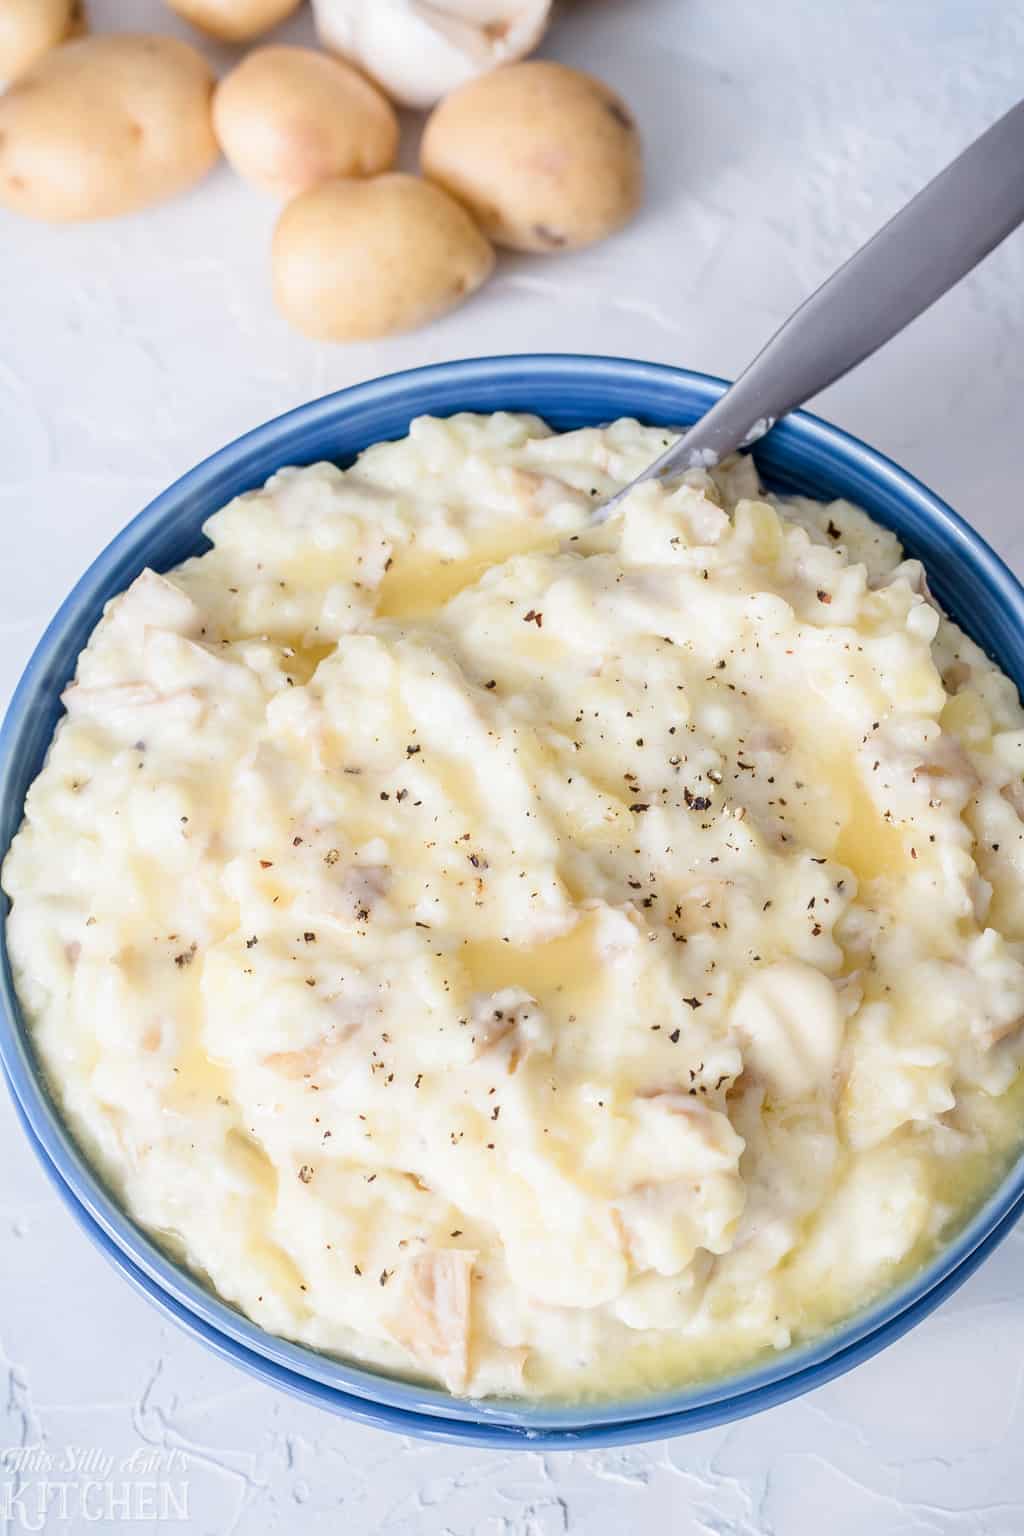 Garlic Mashed Potatoes, creamy garlic mashed potatoes ready in just 20 minutes! #Recipe from ThisSillyGirlsKitchen.com #mashedpotatoes #thanksgiving #christmas #garlicmashedpotatoes